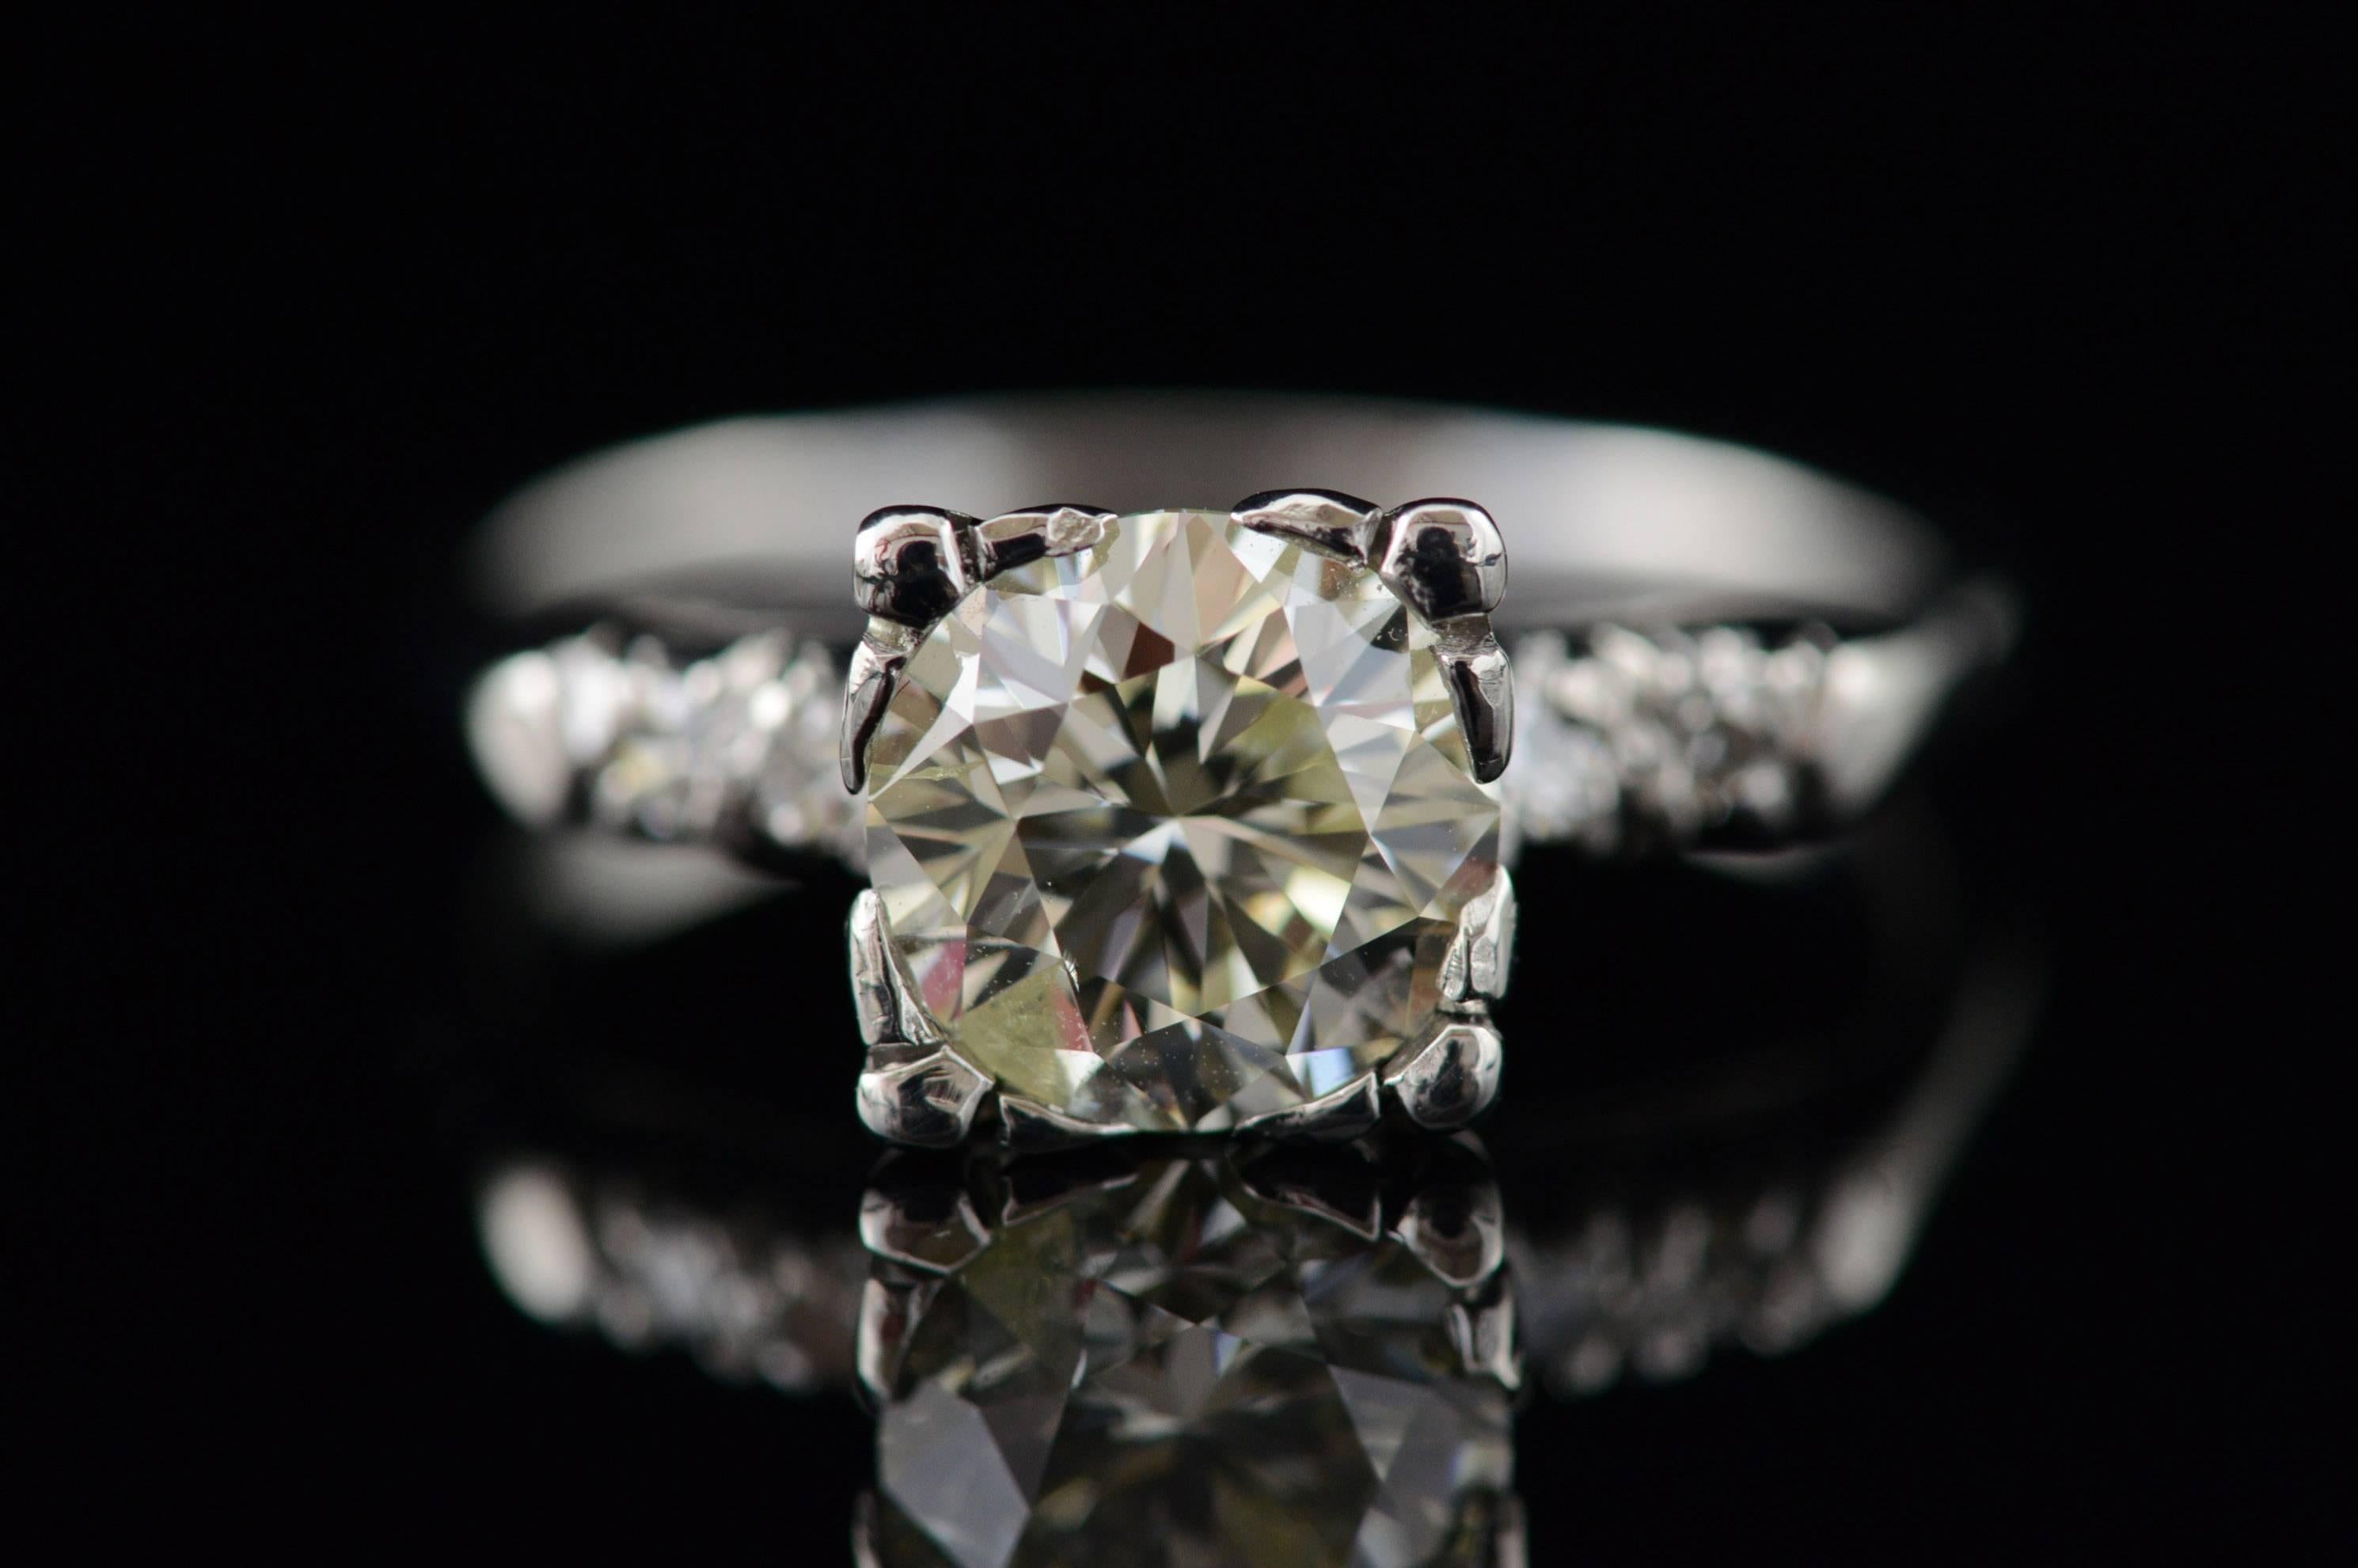 ·Item: 14K 1.58 Ct EGL USA Diamond Engagement Ring Size 6.75 White Gold

·Era: Vintage / 1940s

·Composition: 14k Gold Acid Tested

·Gem Stone: 1.58Ct EGL USA Certified Diamond O-P/I1, 4x Diamonds=0.07Ctw G/VS

·Weight: 4.8g